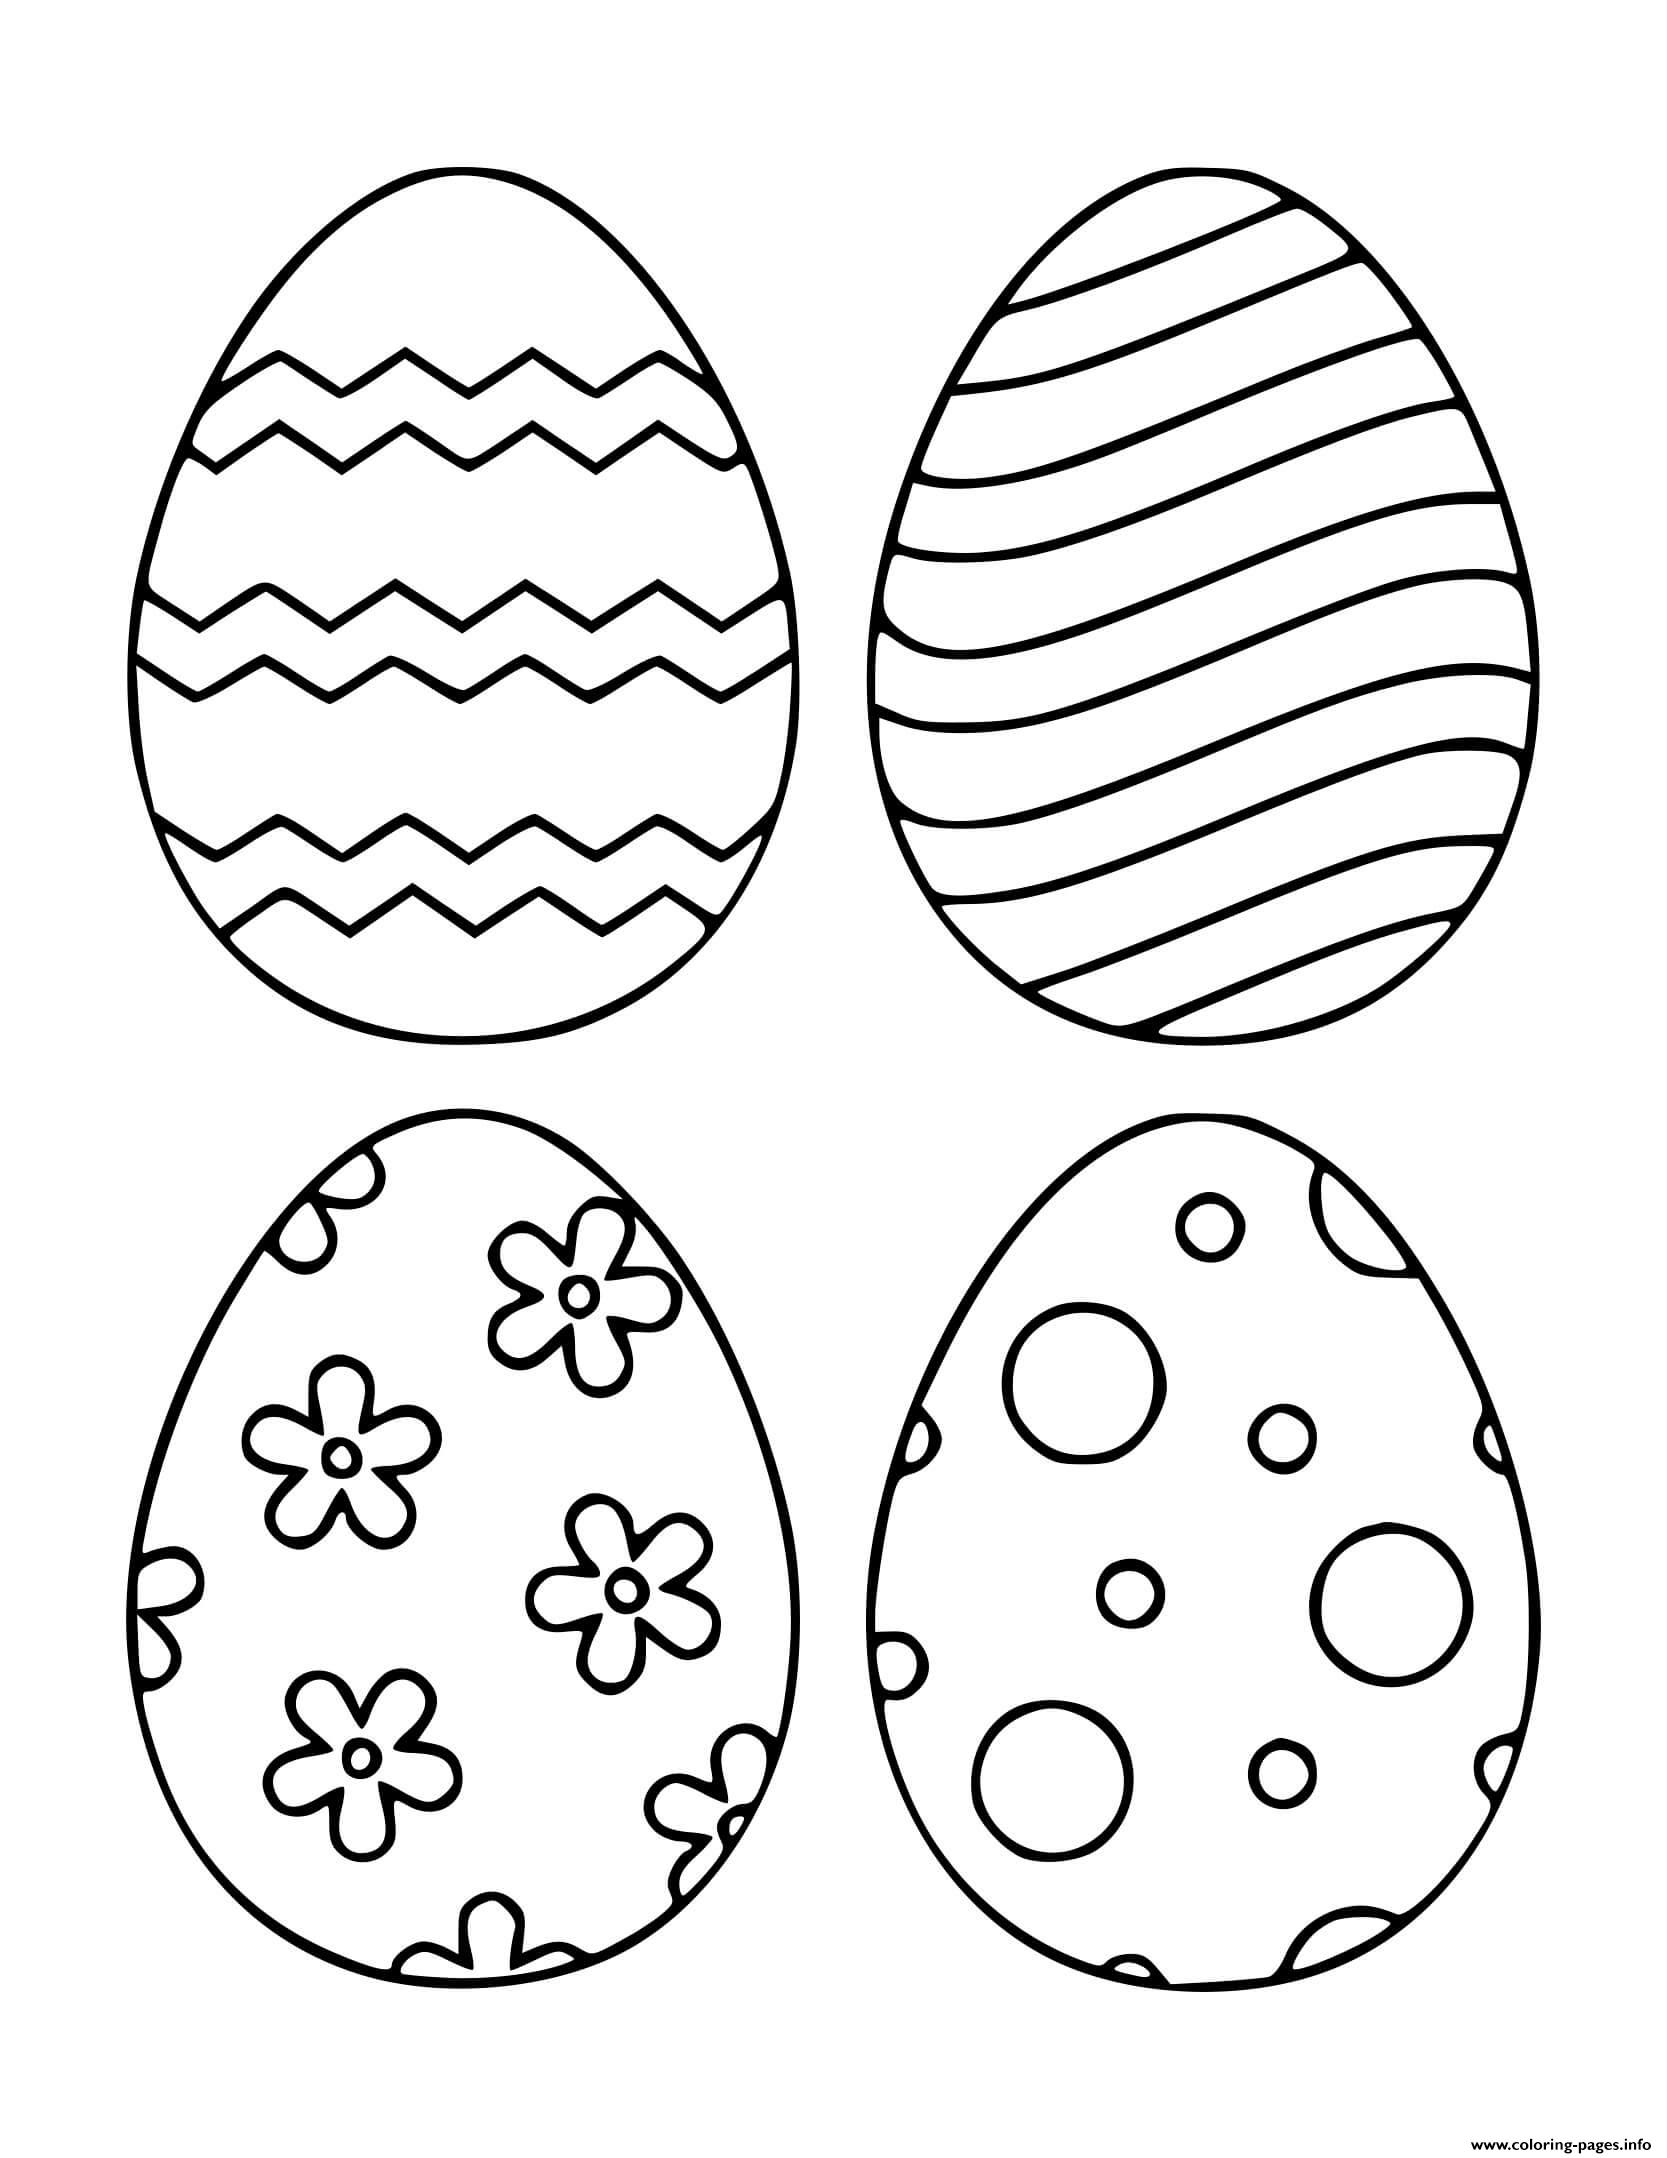 Easter Egg Patterned coloring